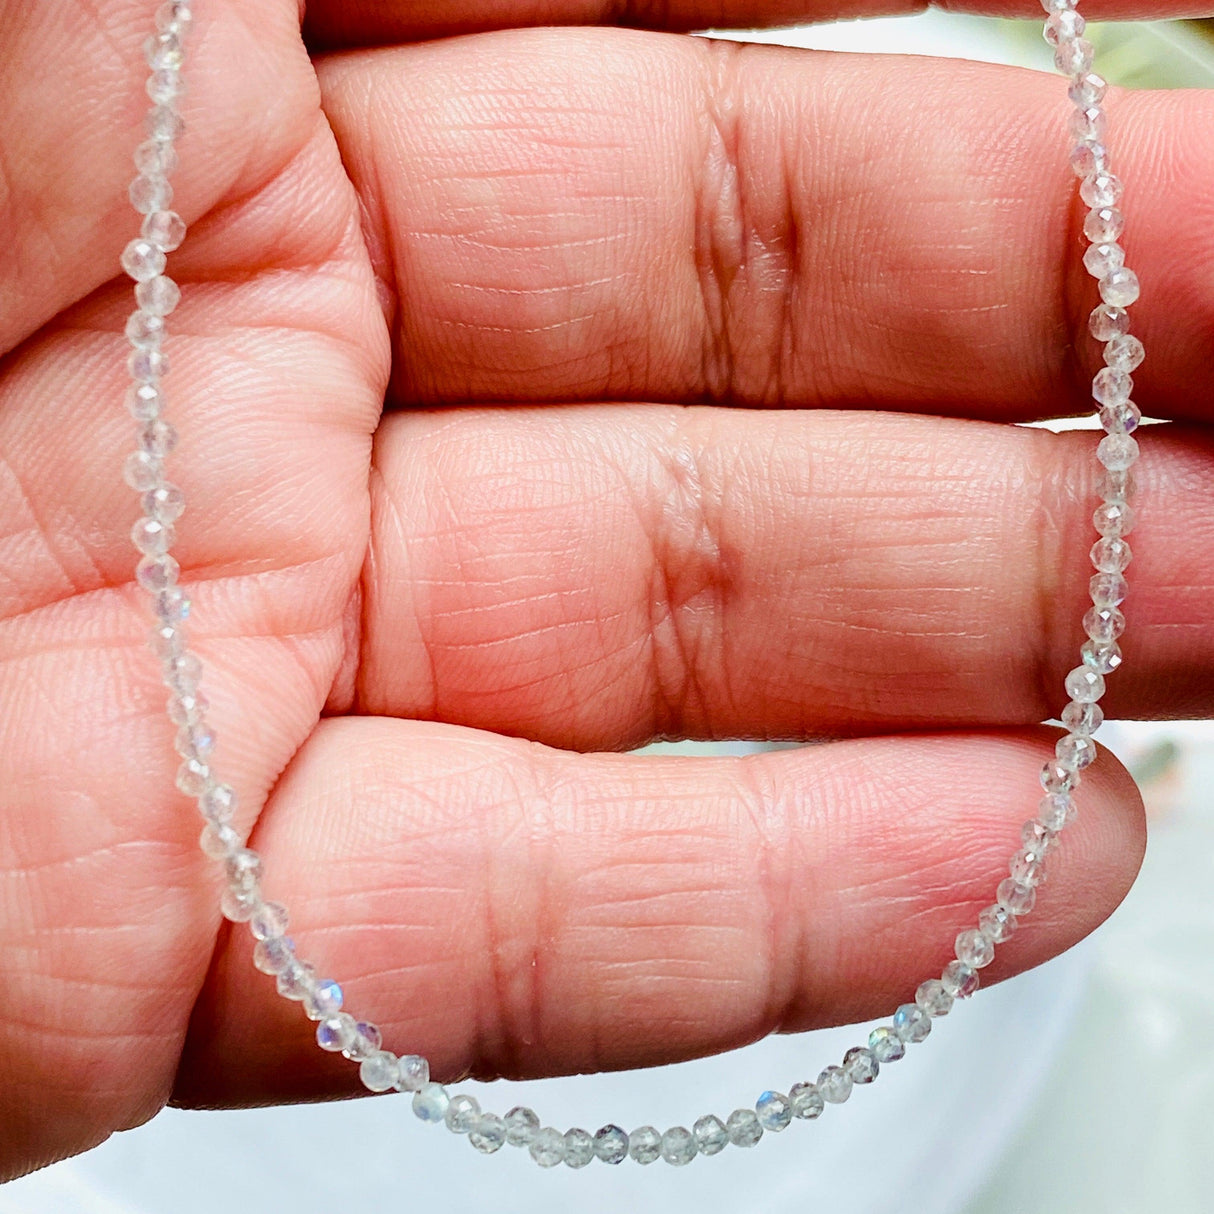 Micro Bead Necklace - Labradorite - Nature's Magick